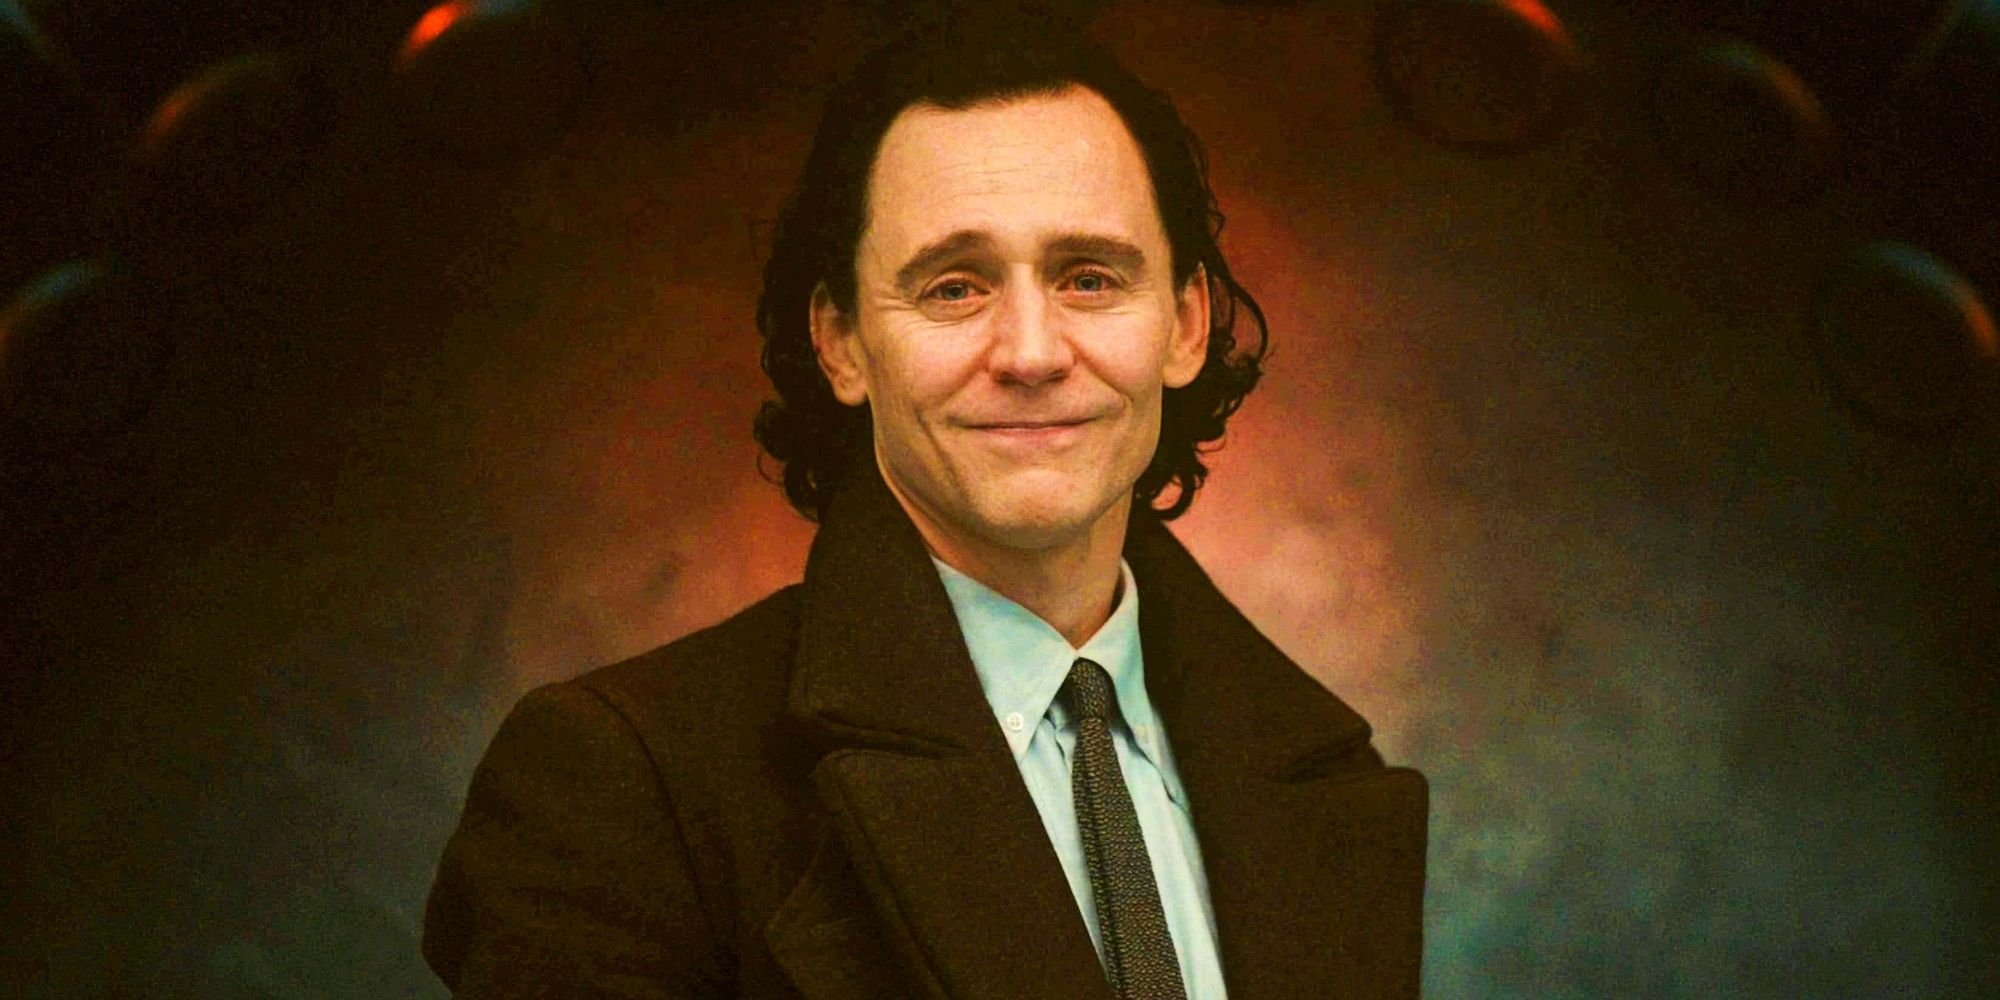 Tom Hiddleston As Loki Saying His Final Goodbye To Mobius And Sylvie In The Loki Season 2 Finale